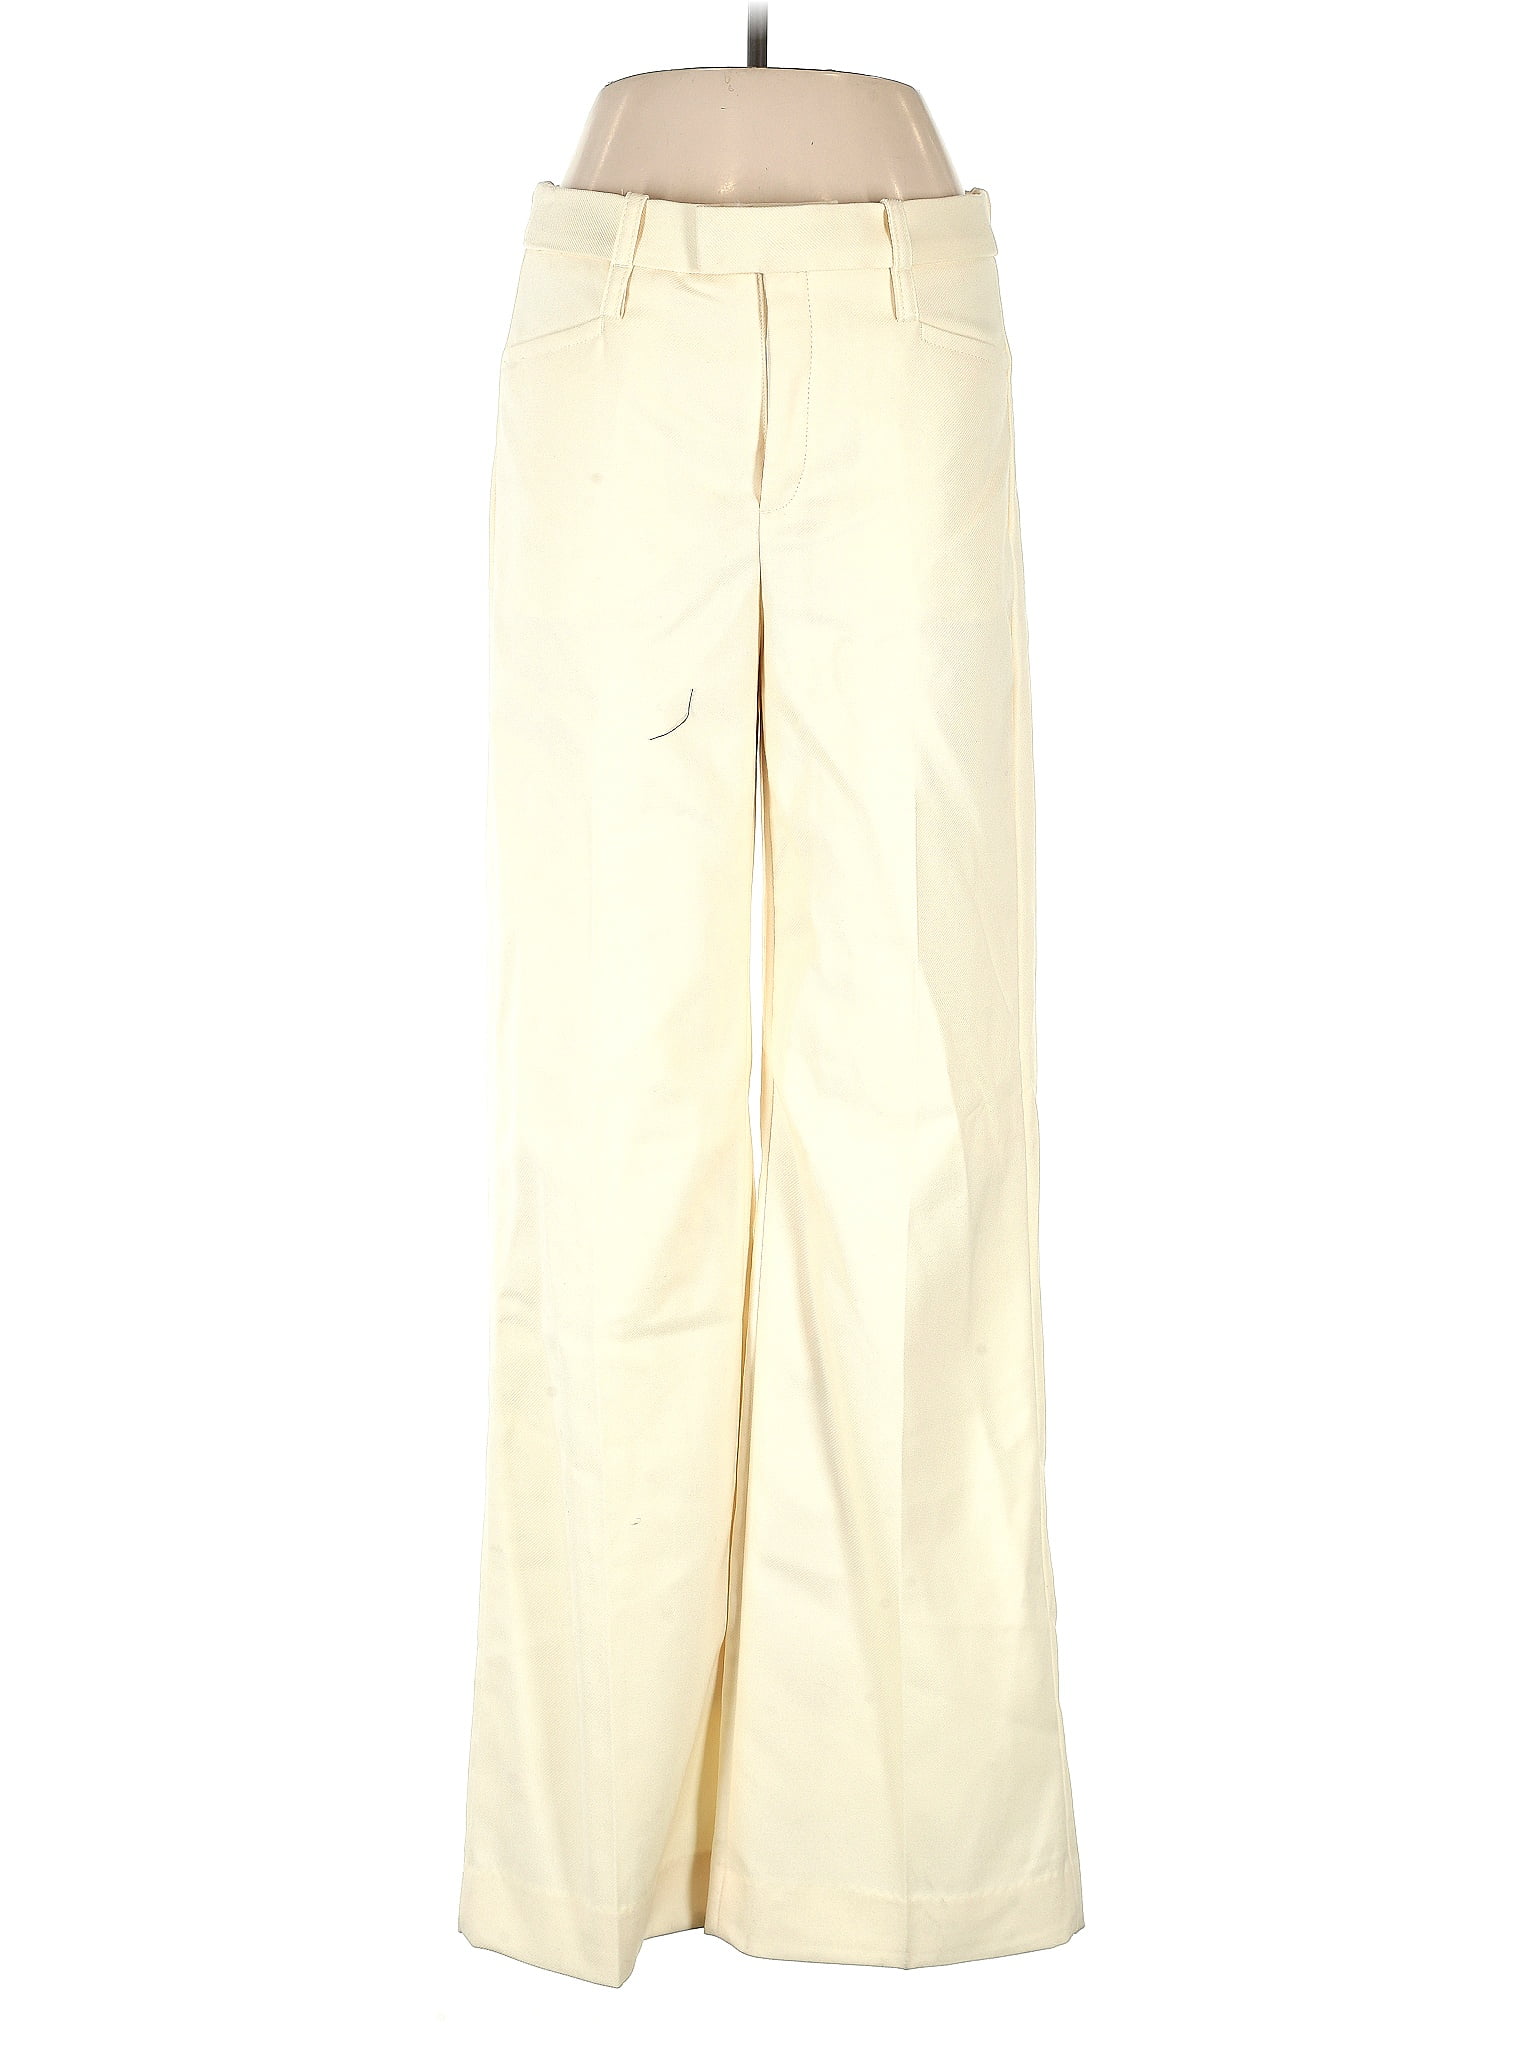 Banana Republic 100% Wool Solid Ivory Wool Pants Size 4 - 72% off | ThredUp